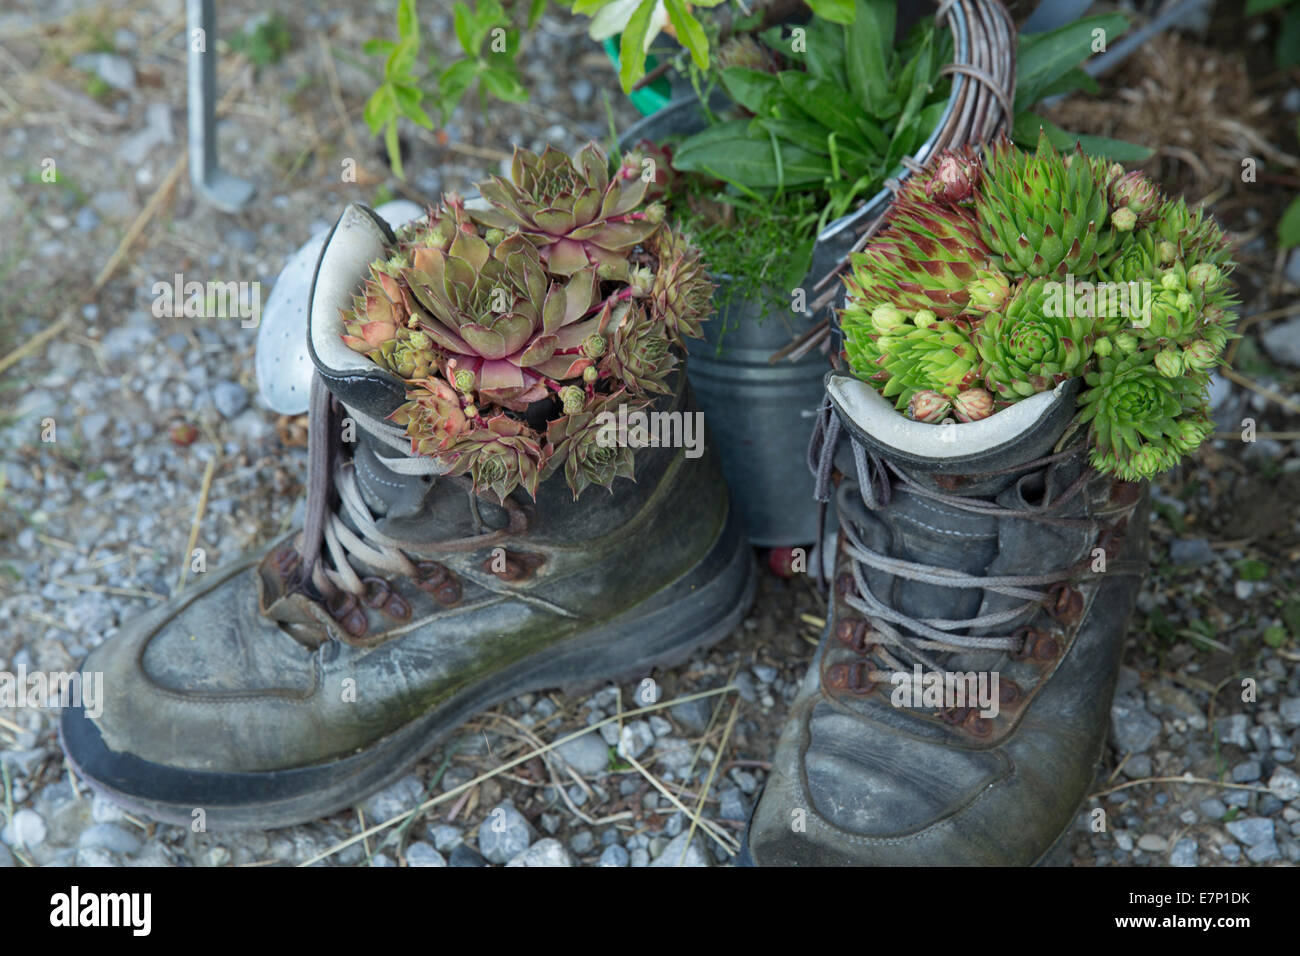 Shoes, traveling shoes, footpath, walking, hiking, flower, flowers, Switzerland, Europe, Stock Photo